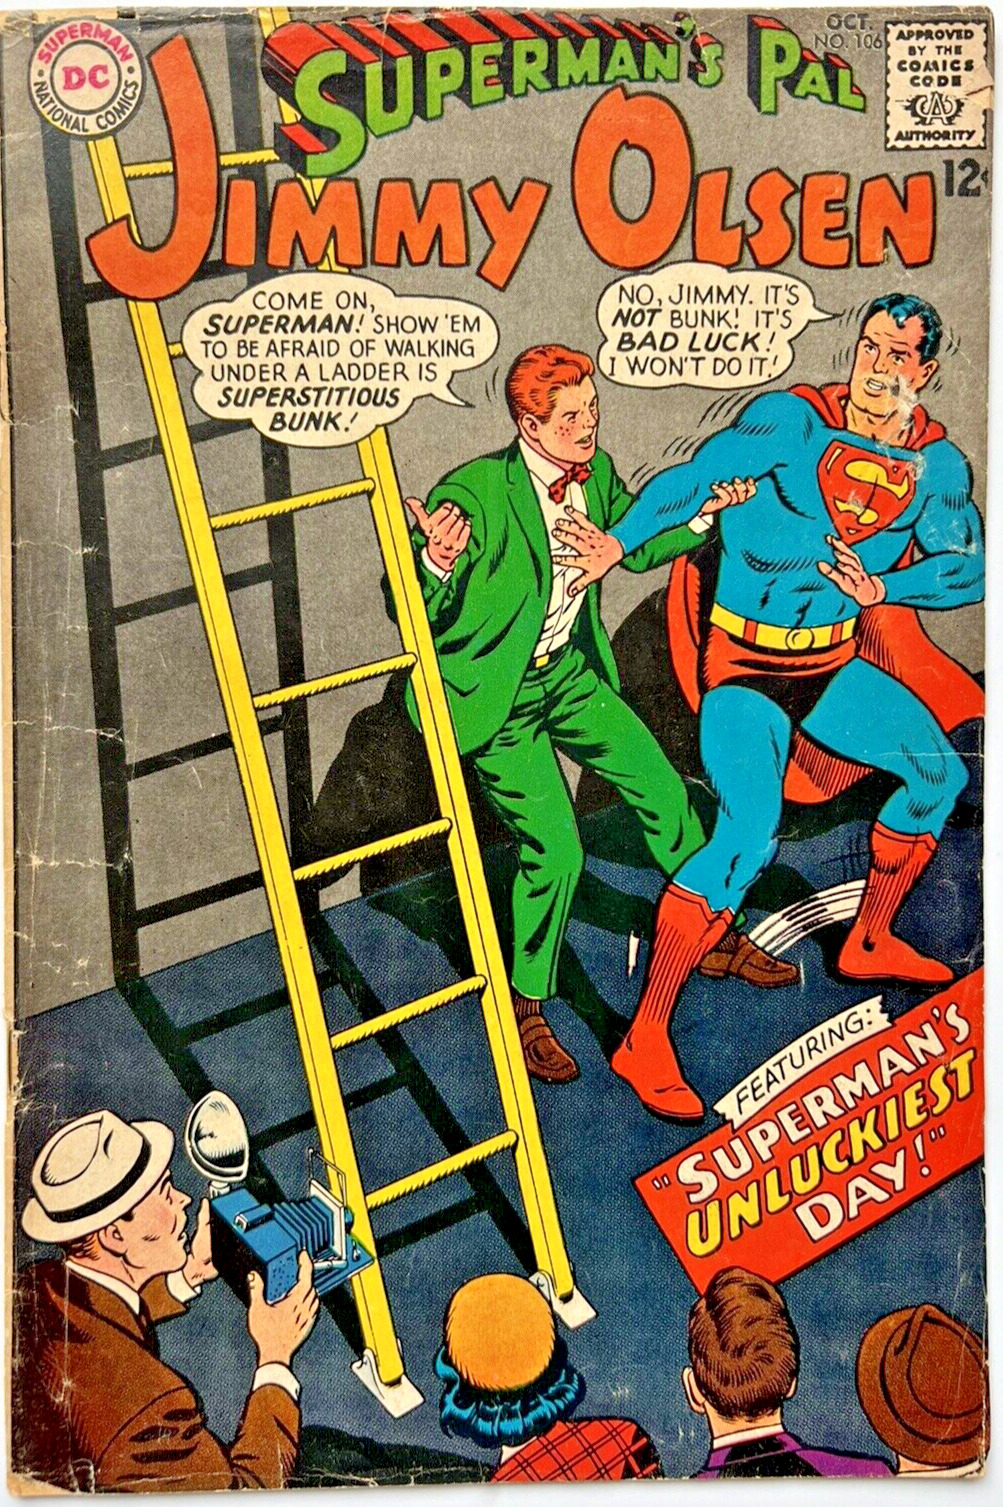 Oct 1967 DC COMICS SUPERMAN'S PAL JIMMY OLSEN No 106 Comic Book 3E